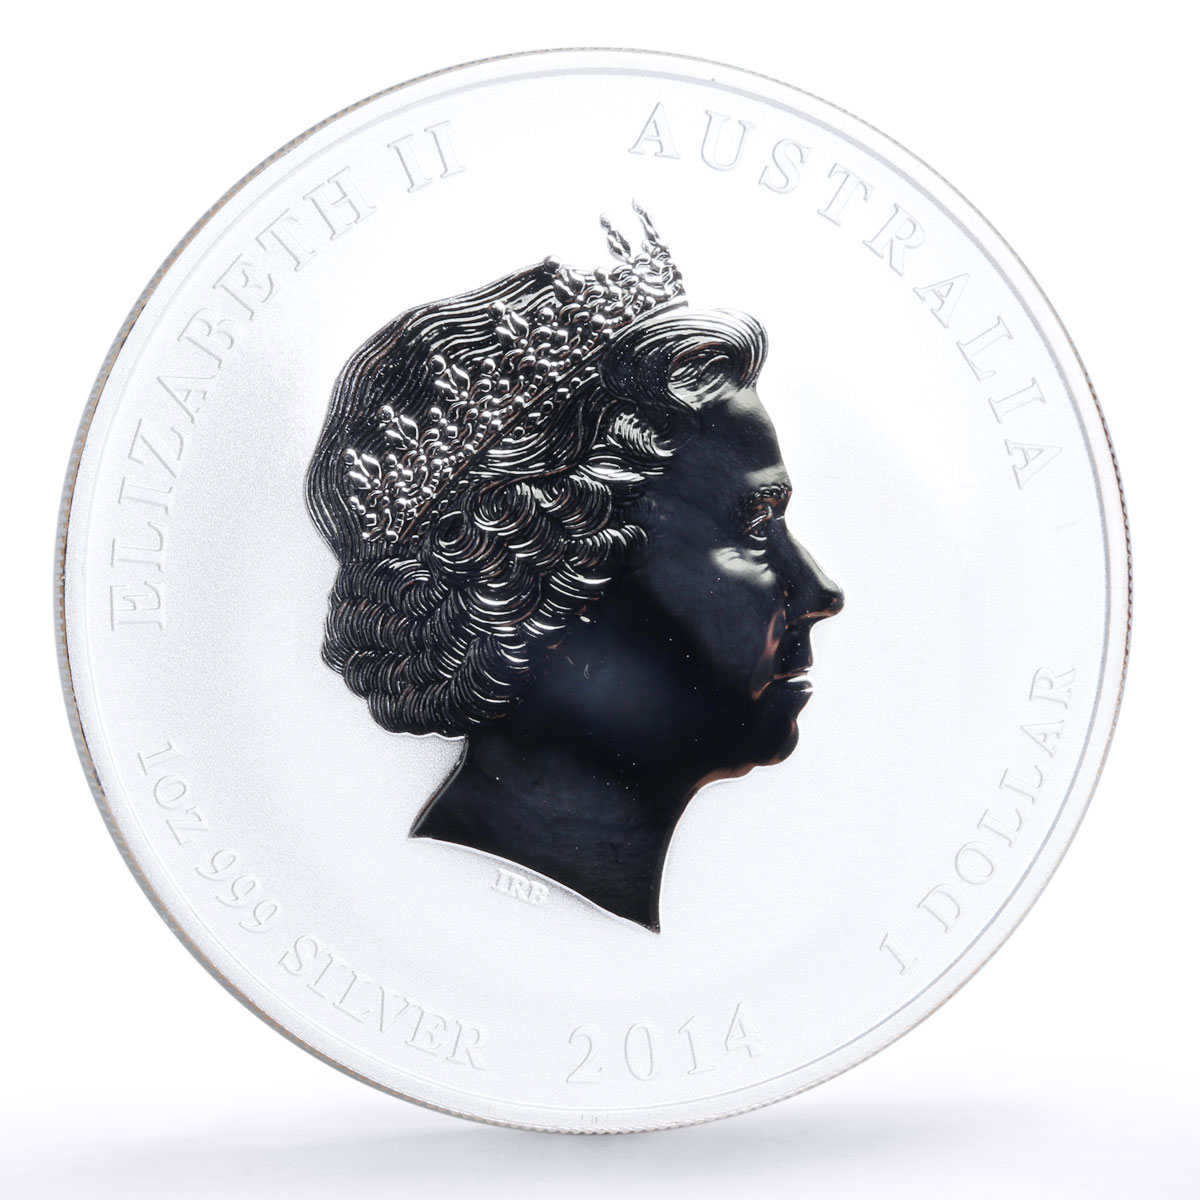 Australia 1 dollar Lunar Calendar series II Year of the Horse silver coin 2014